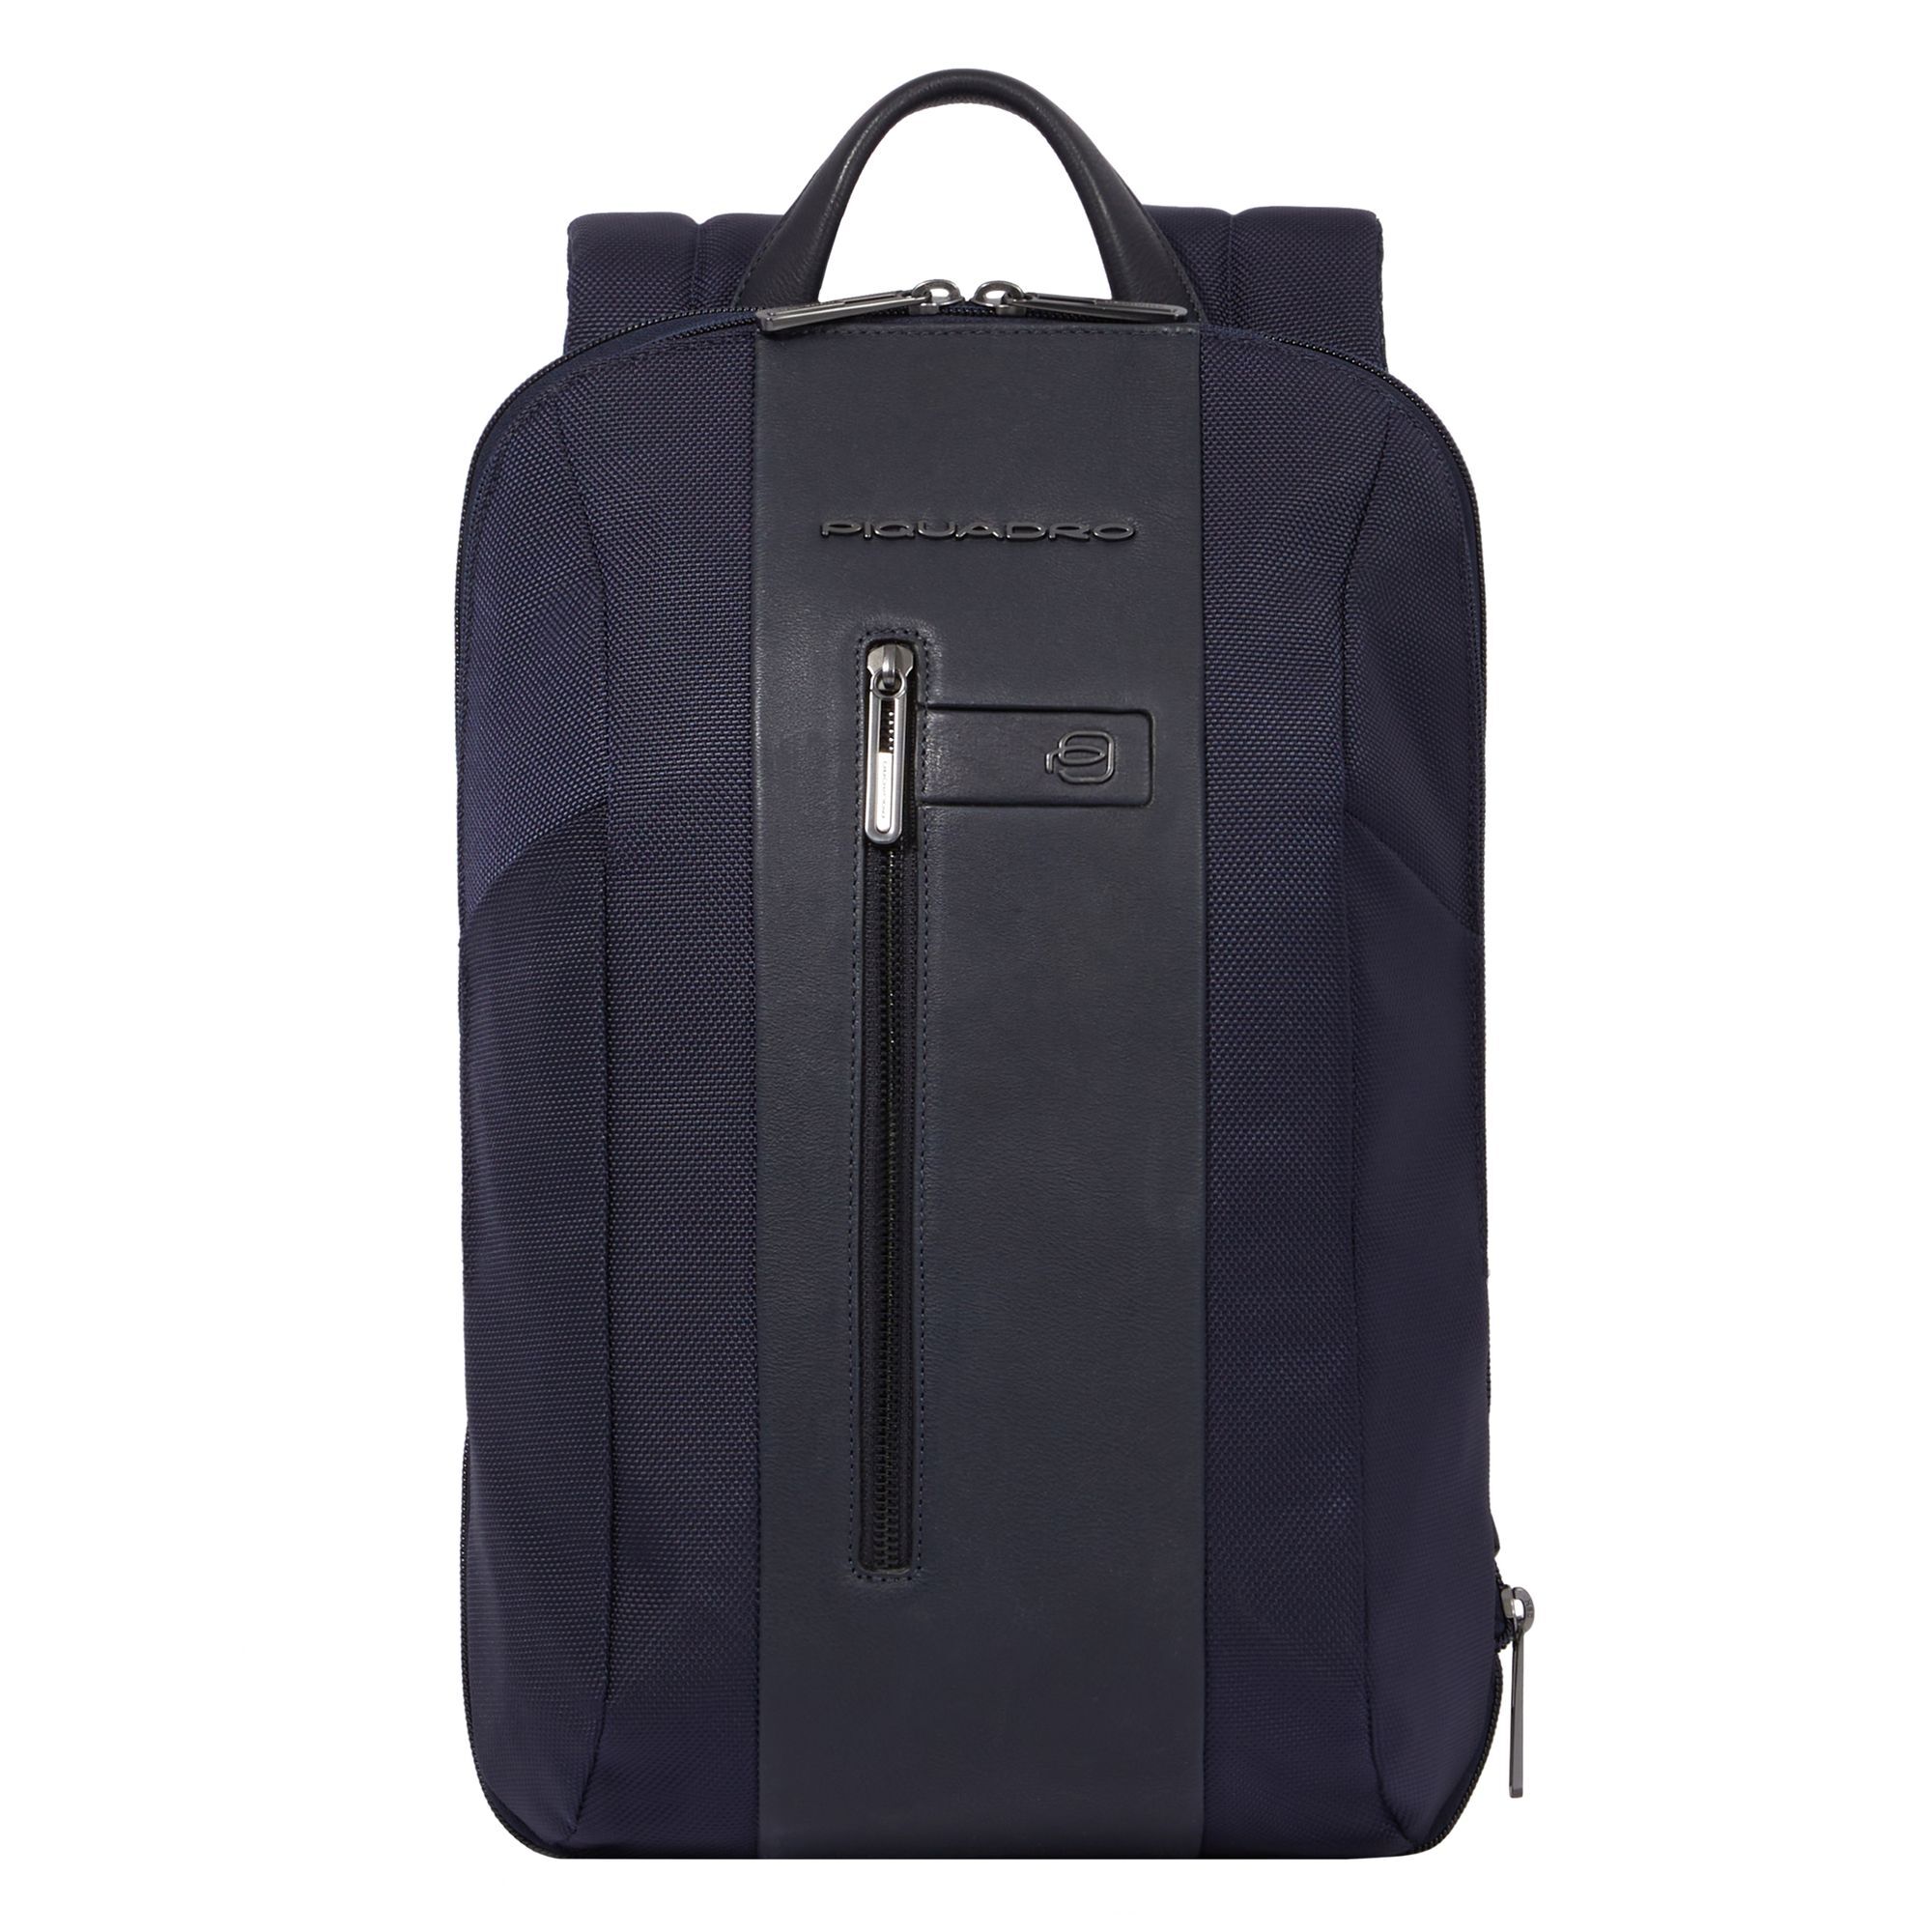 Рюкзак Piquadro Brief 2 43 cm Laptopfach, синий рюкзак piquadro brief 2 синий ca4536br2 blu